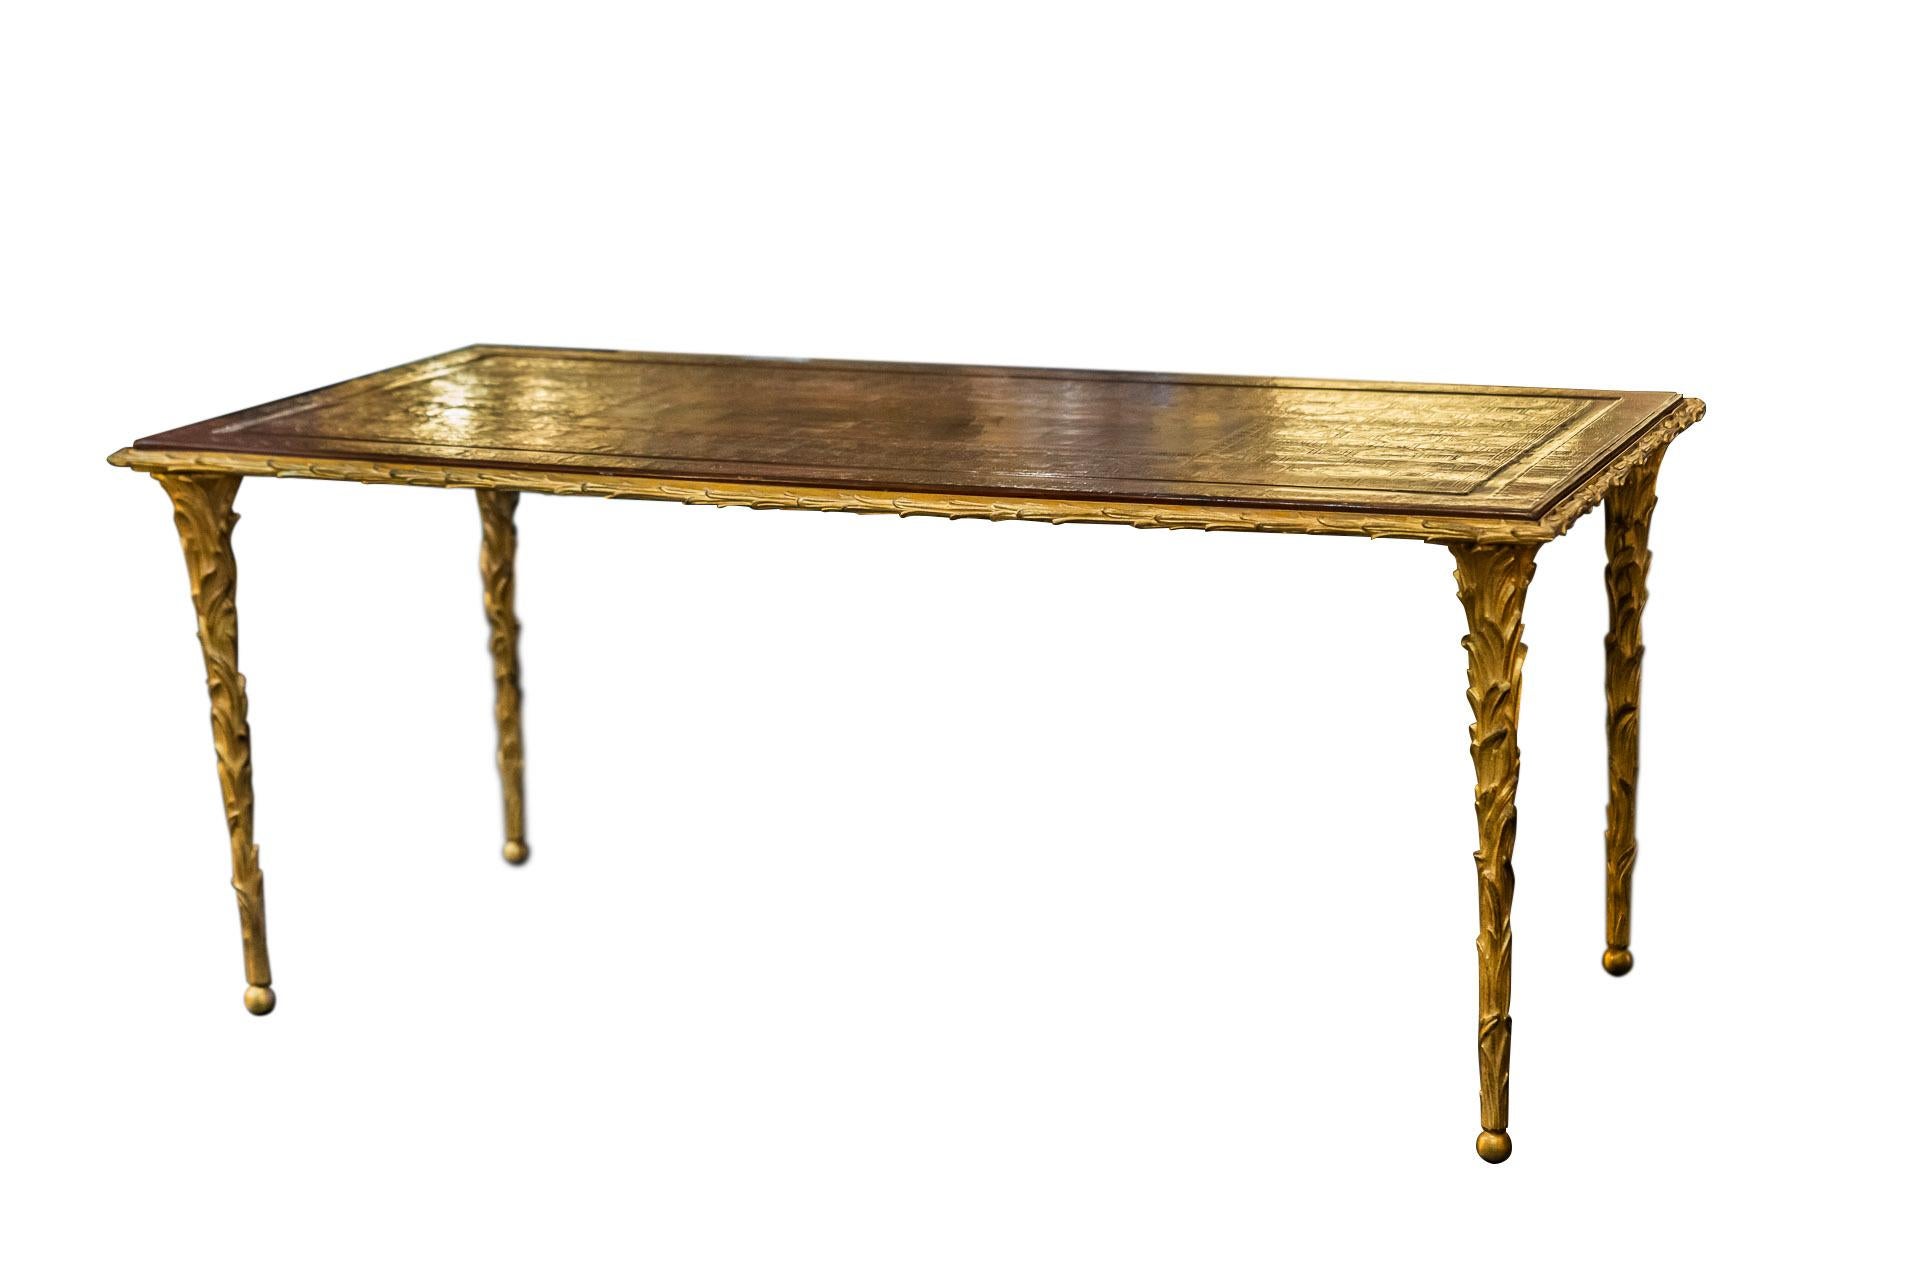 Maison Baguès,
Coffee table,
Gilt bronze, palm-shaped feet,
Lacquered wood tabletop (Coromandel lacquer),
France, circa 1970.

Measures: Width 103 cm, depth 54 cm, height 43 cm.